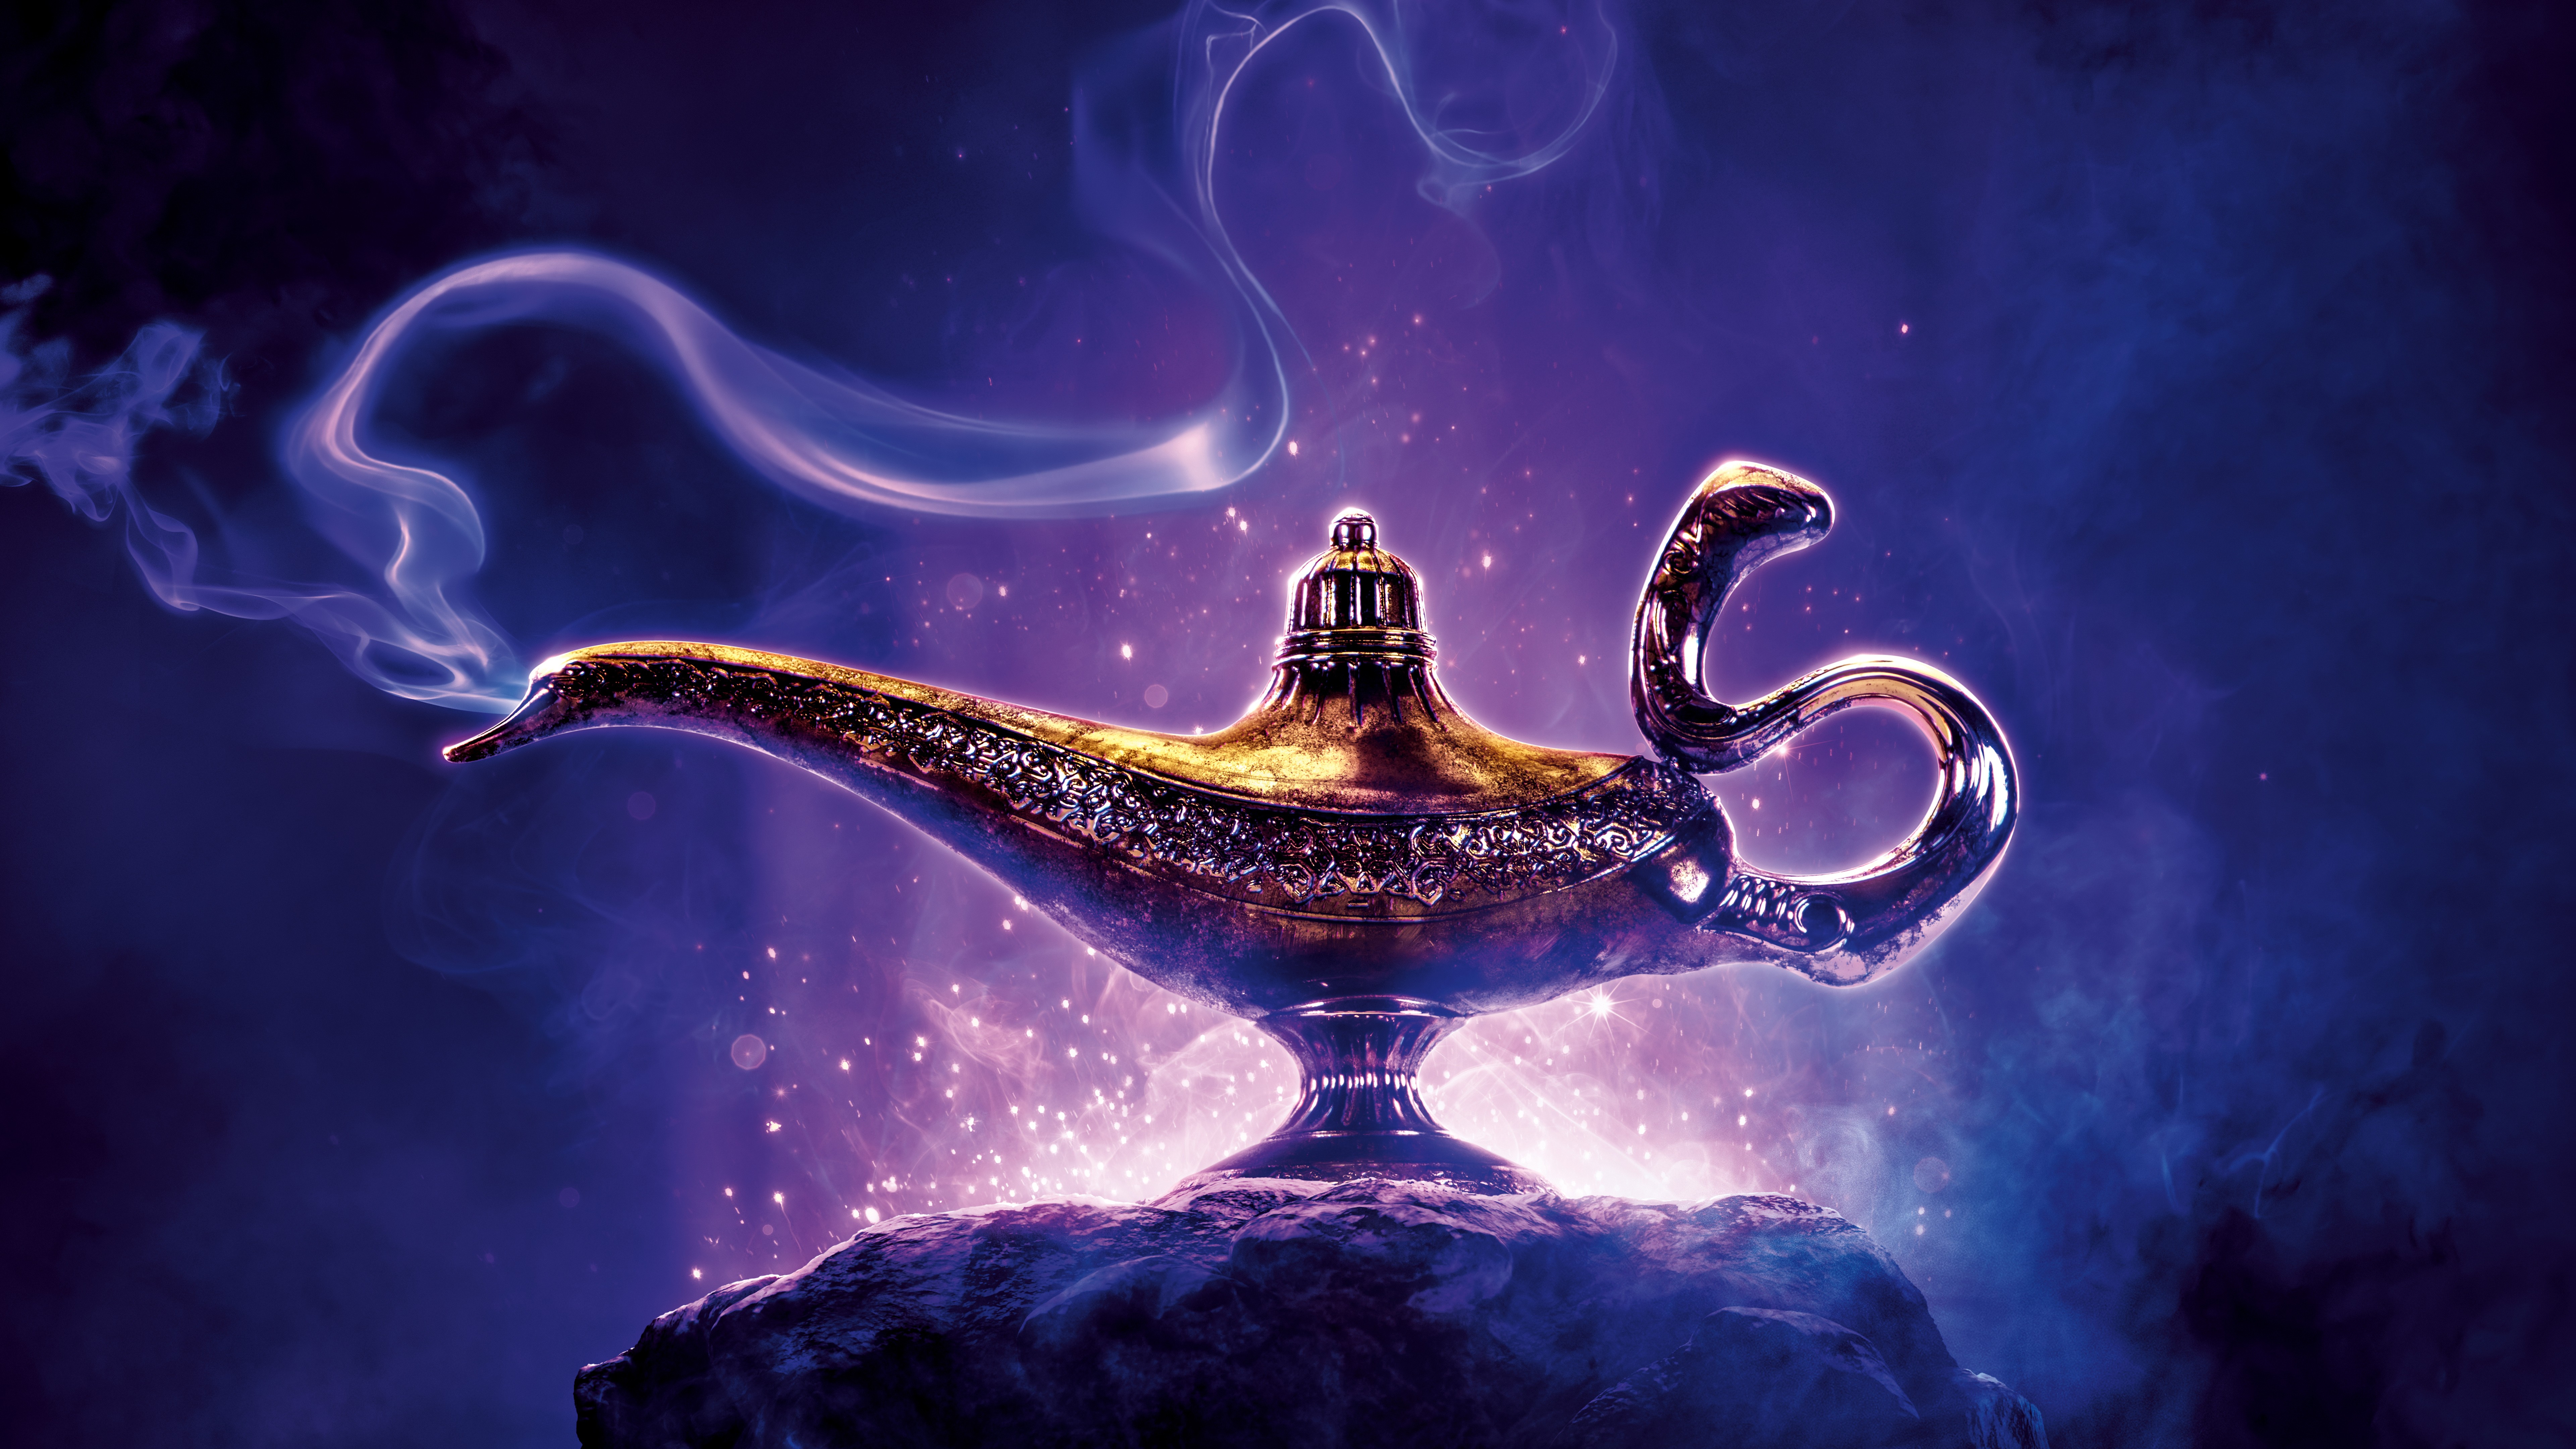 Movie Aladdin (2019) HD Wallpaper | Background Image